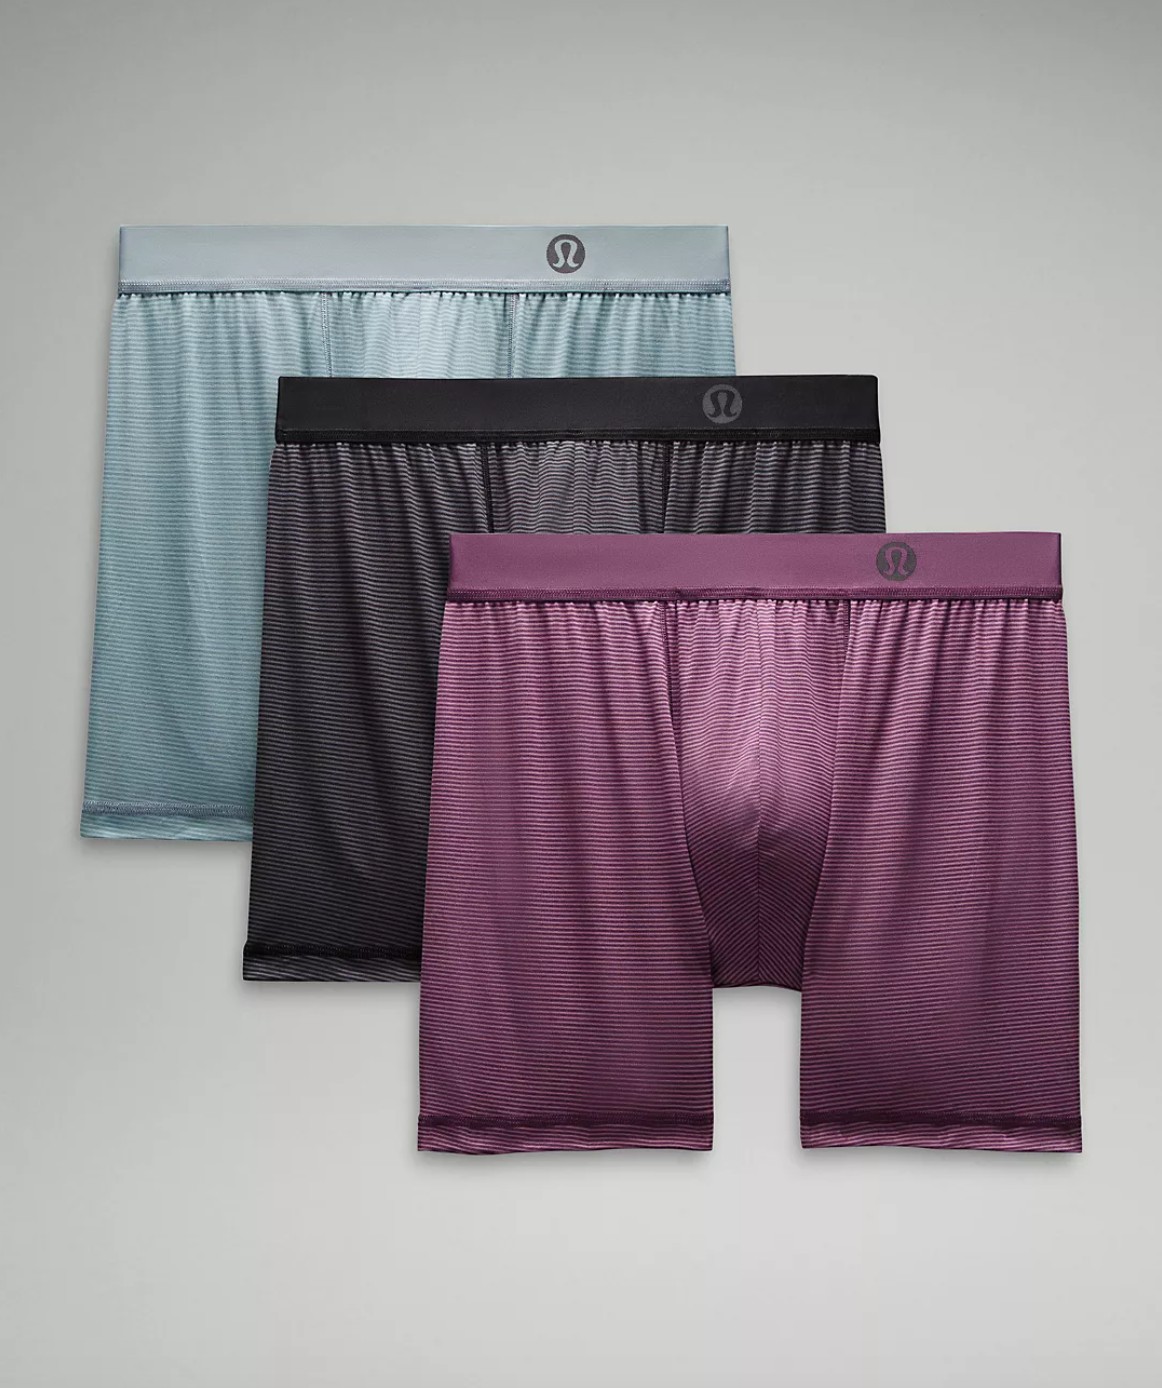 Review: Lululemon's Men's Underwear Is the Upgrade I Needed